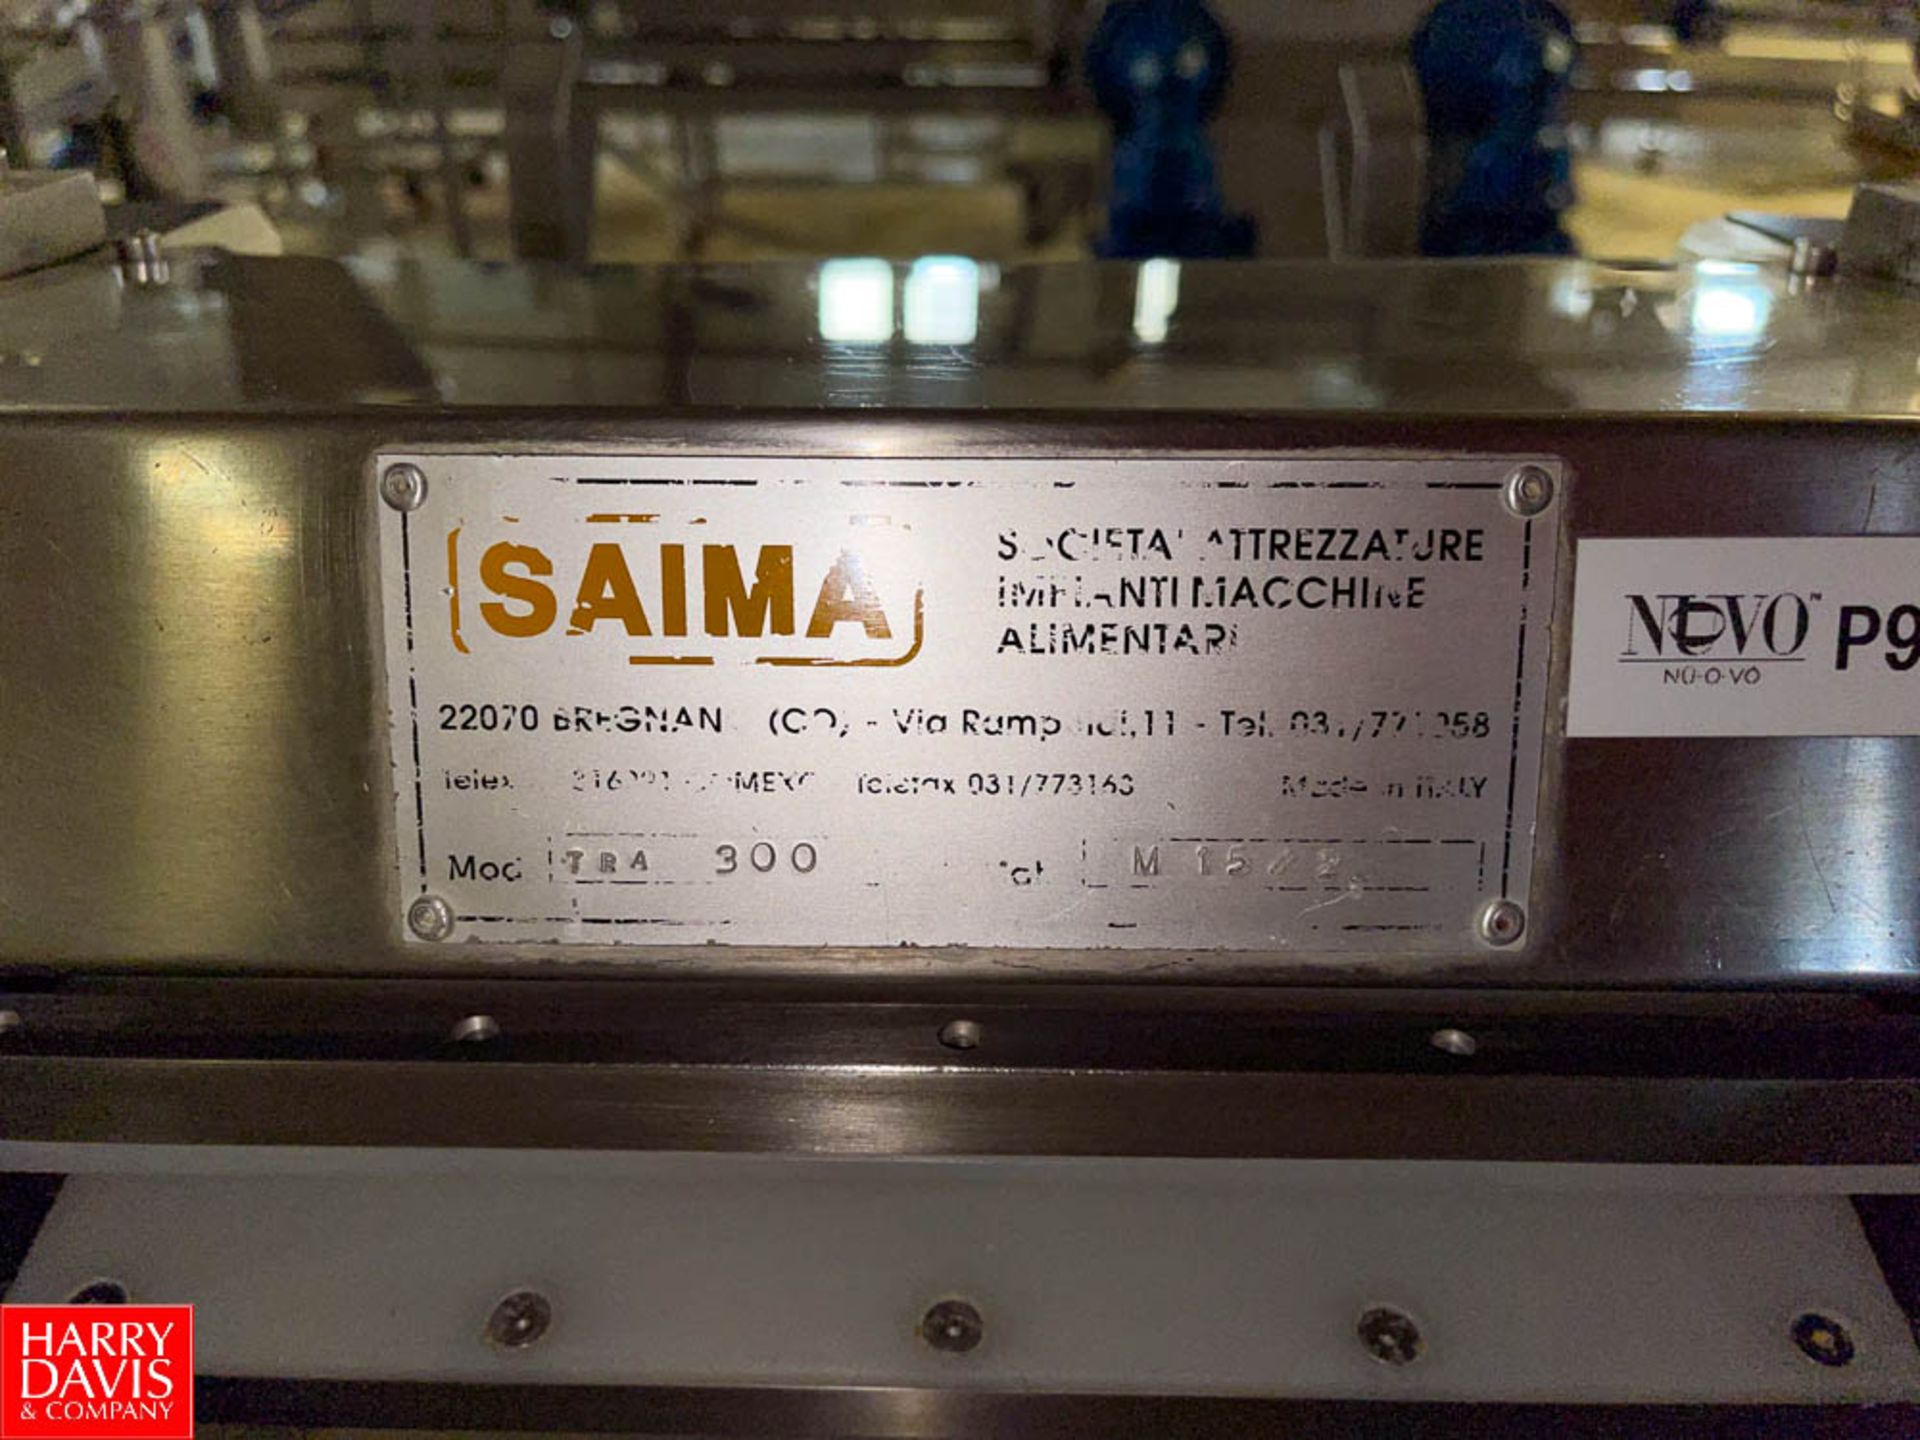 SAIMA Pasta Sheeter Former, Model: TRA300, S/N: M 15/2. Rigging Fee: $250 - Image 2 of 2